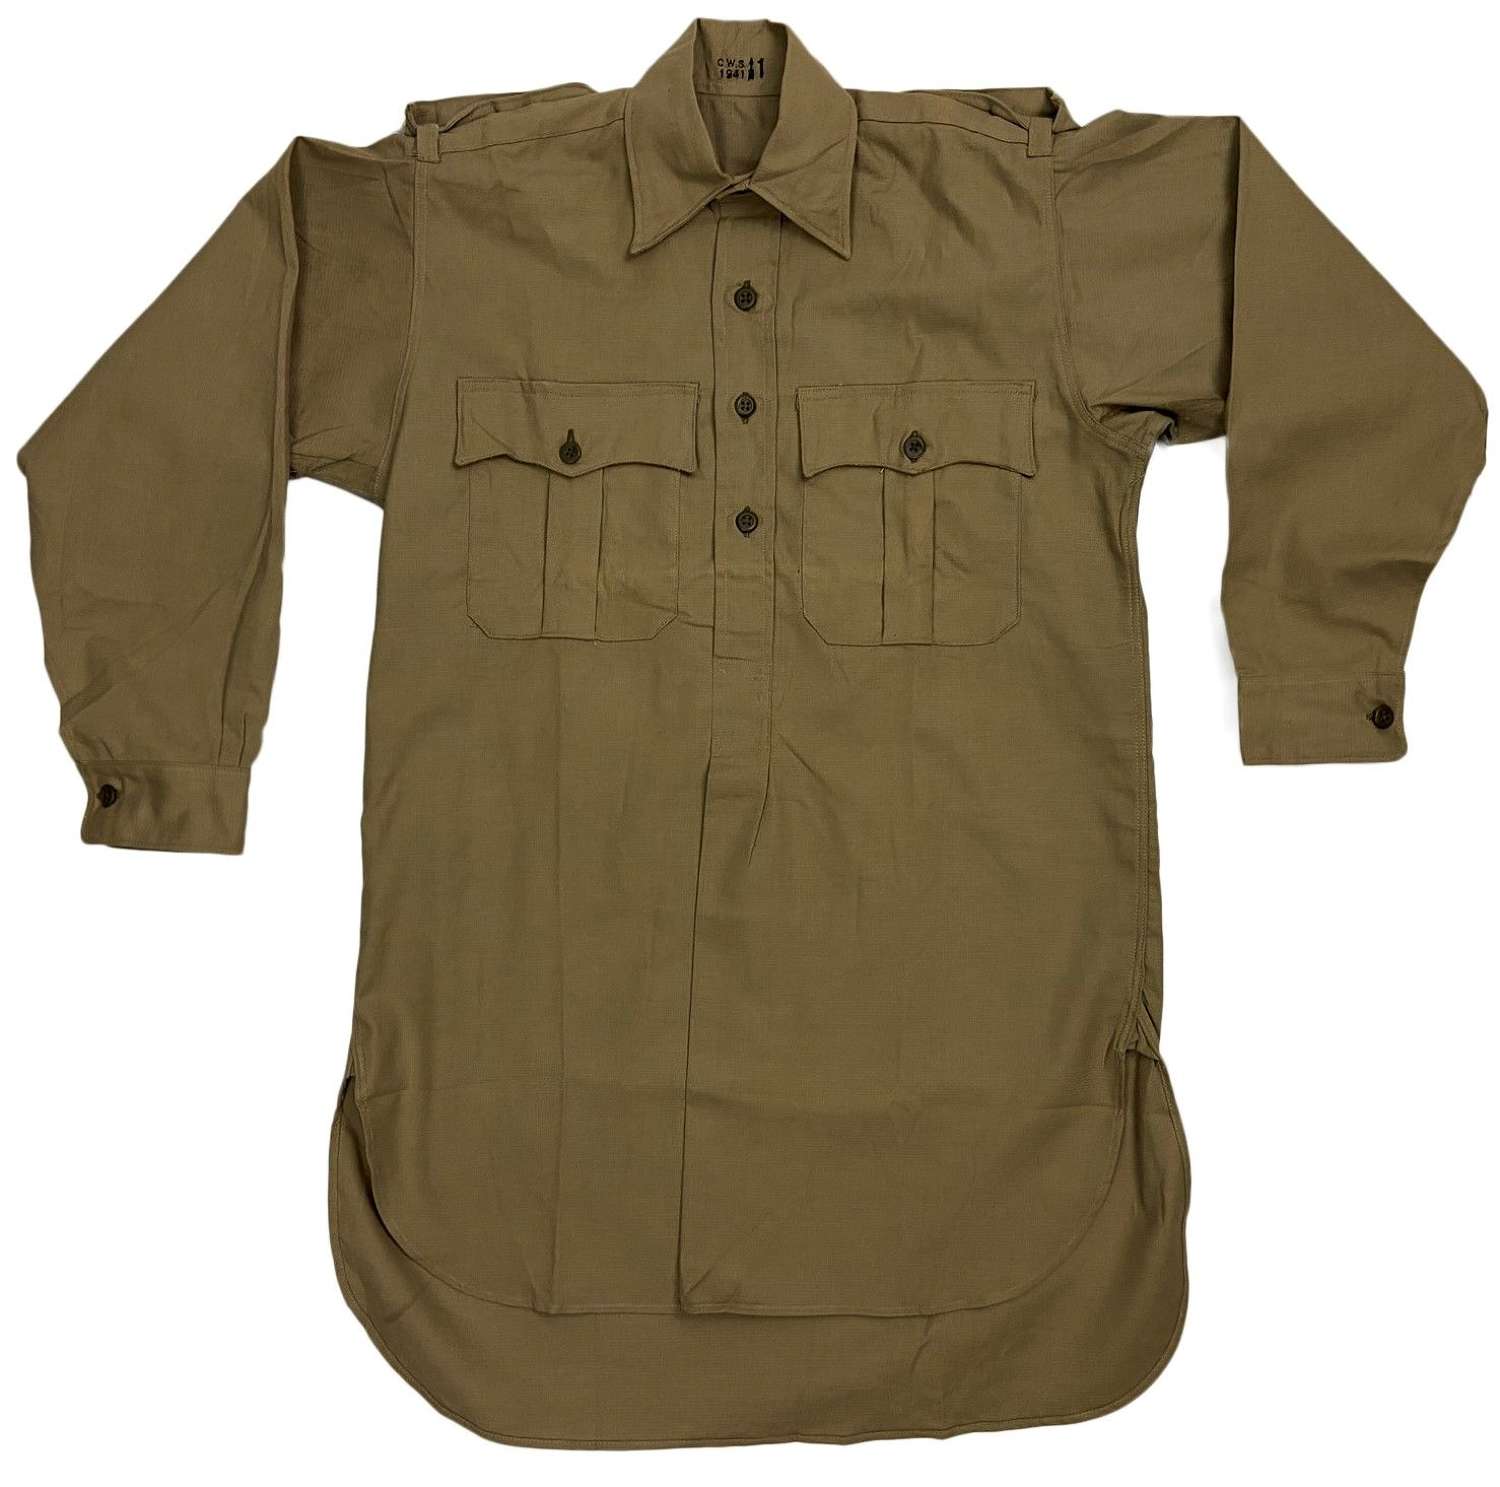 Rare original 1941 Dated British Army Khaki Drill Shirt by 'C.W.S'